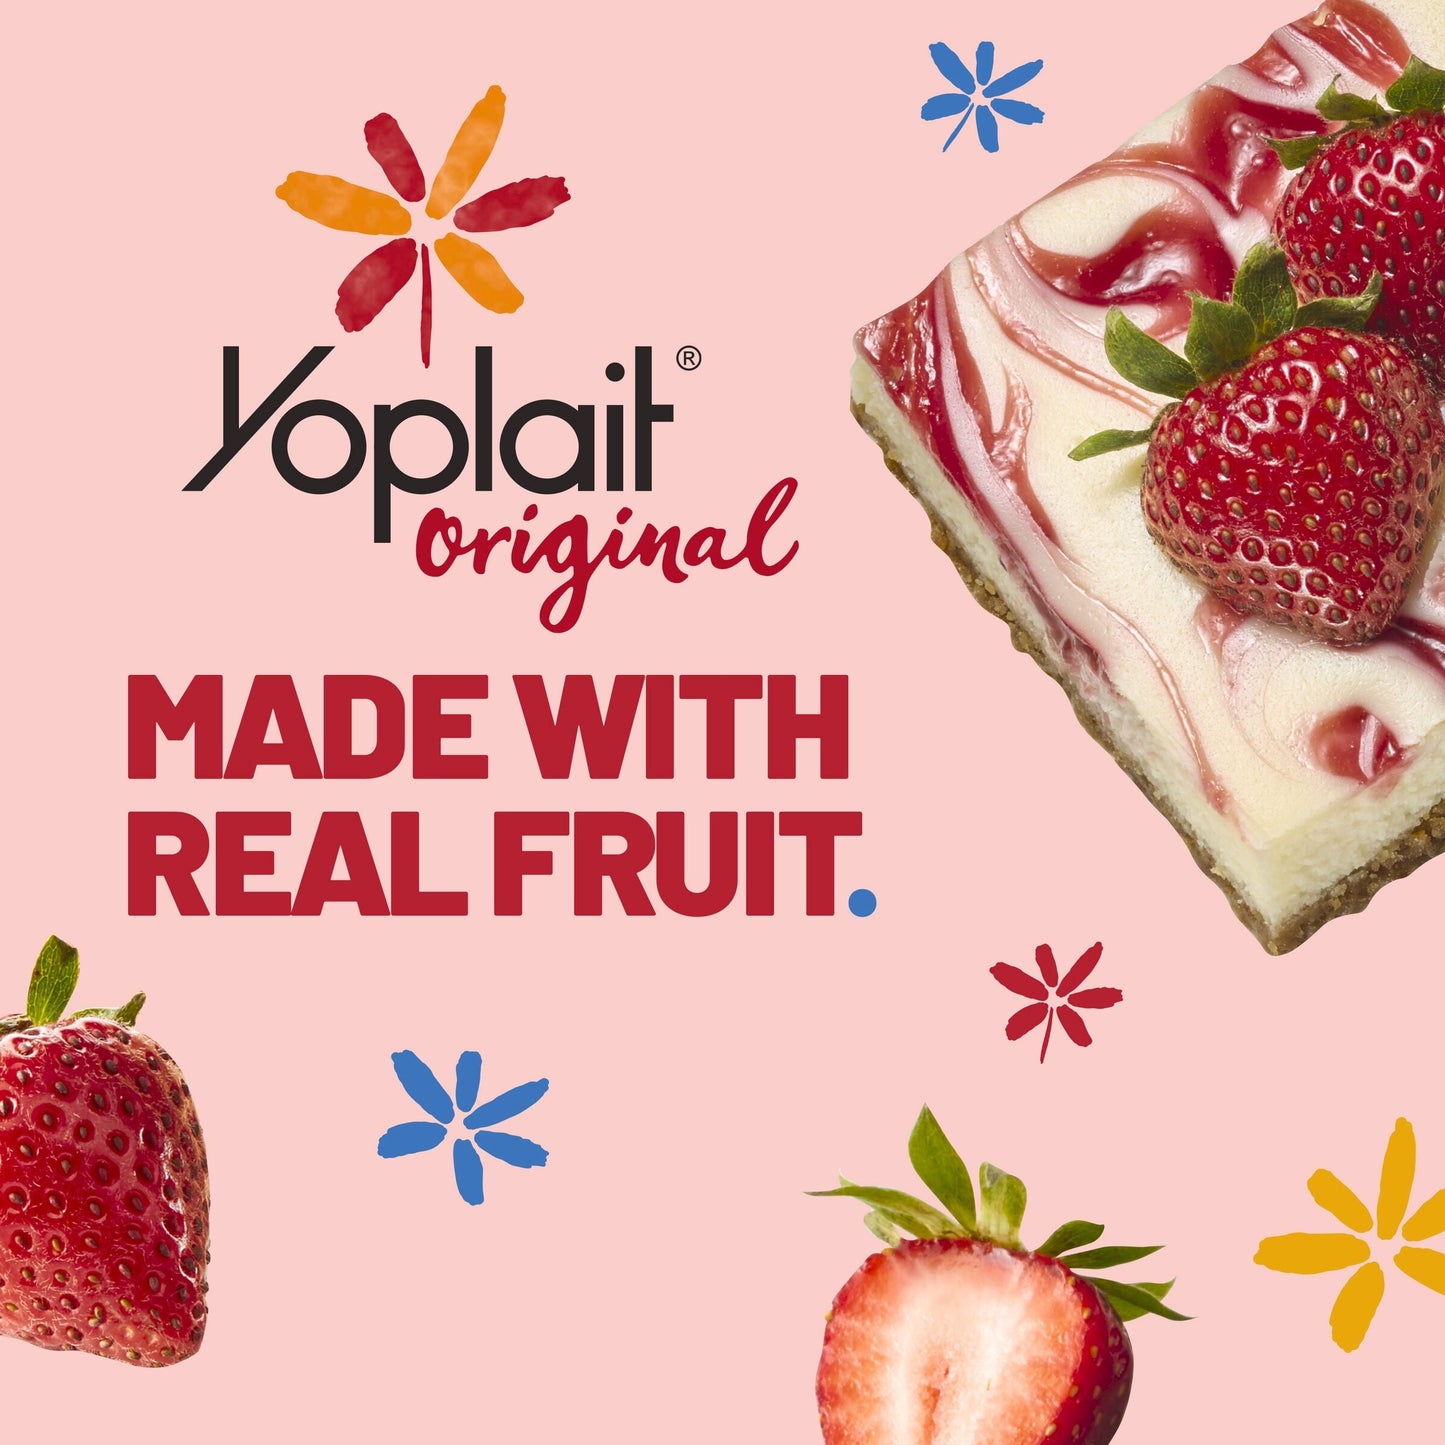 Yoplait Original Strawberry Cheesecake Low Fat Yogurt, 6 OZ Yogurt Cup